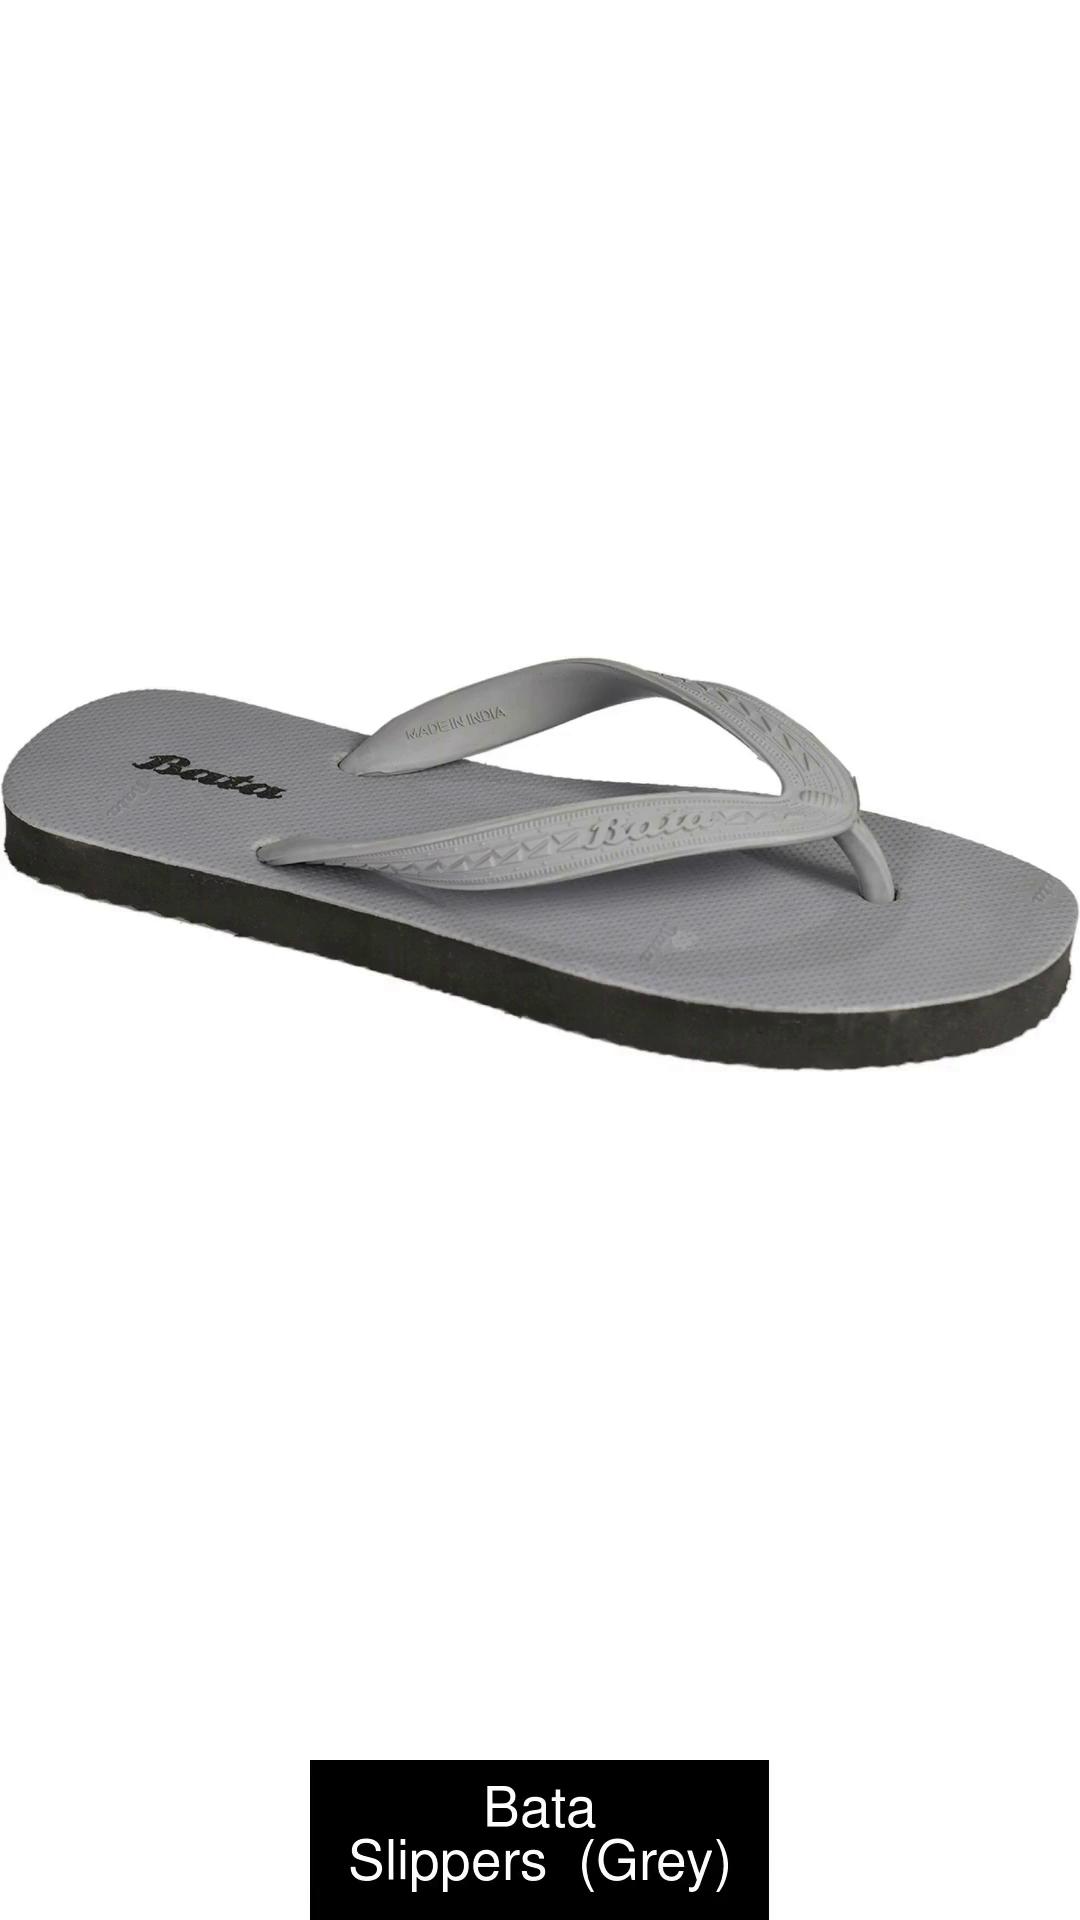 Bata Mens Slip-on Sandal Hawai Shoes price from jumia in Kenya - Yaoota!